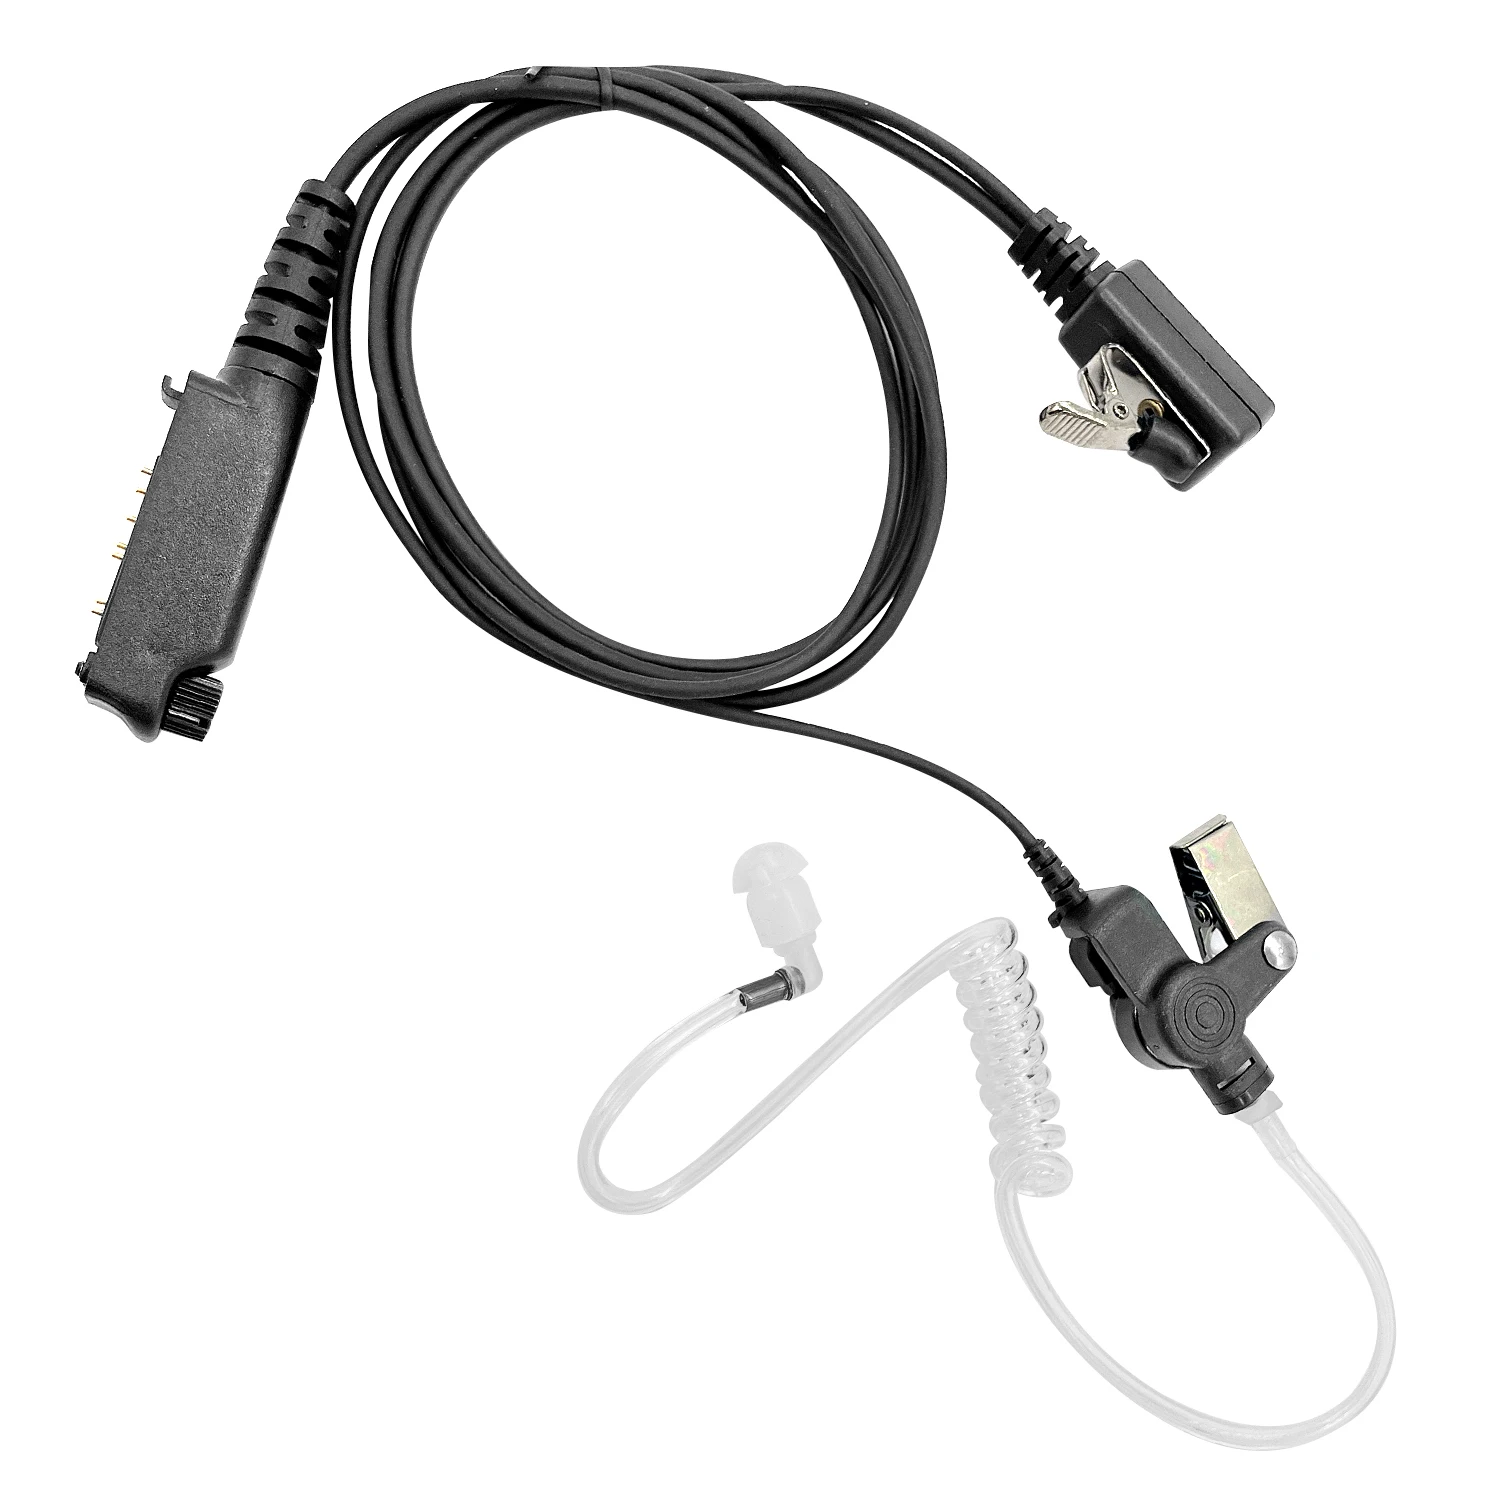 2-Wire Covert Acoustic Tube Surveillance Earpiece Headset Mic PTT Kit for Motorola XPR3500e XPR3000 XPR3300 XPR3300e XPR3500 Two Way Radio Walkie Talkie by Klykon 